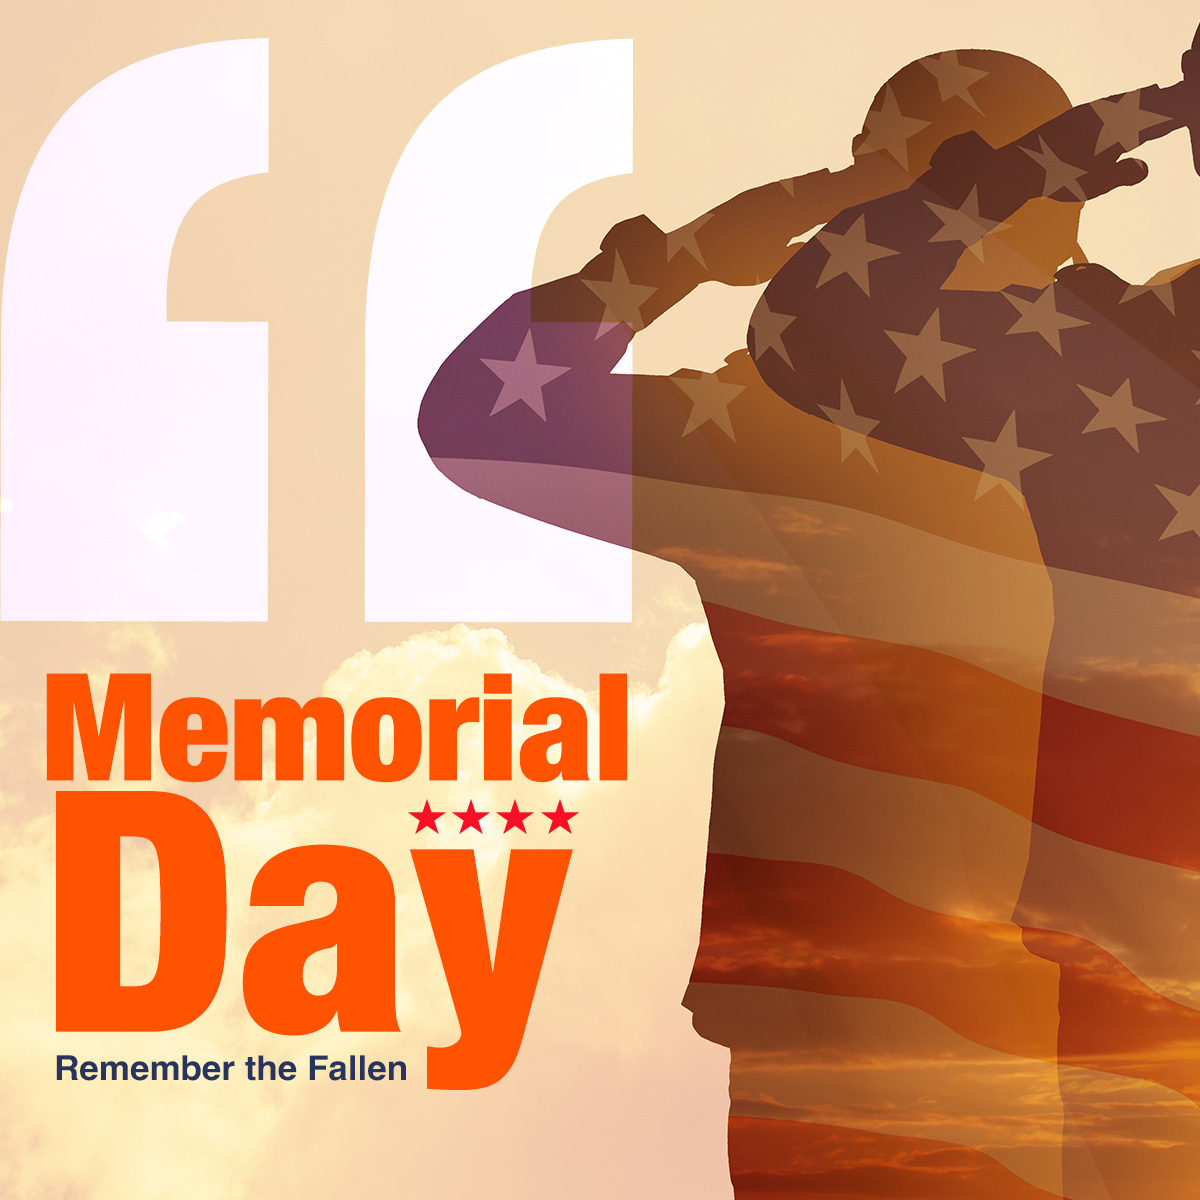 Memorial Day - Remember the Fallen